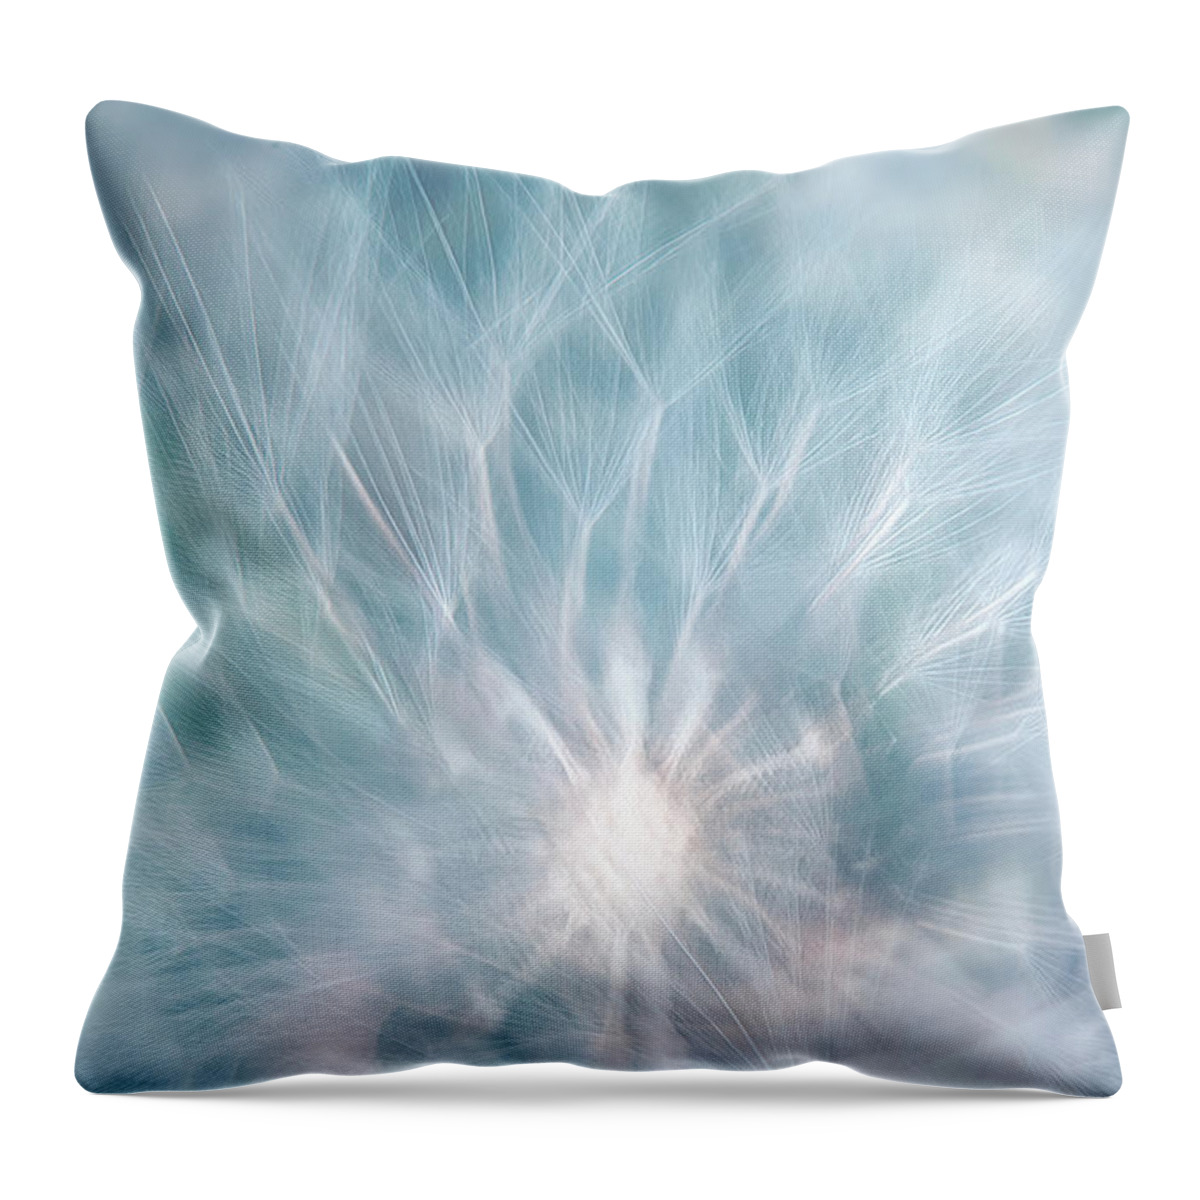 Photography Throw Pillow featuring the digital art Dandelion Blue Beauty by Terry Davis